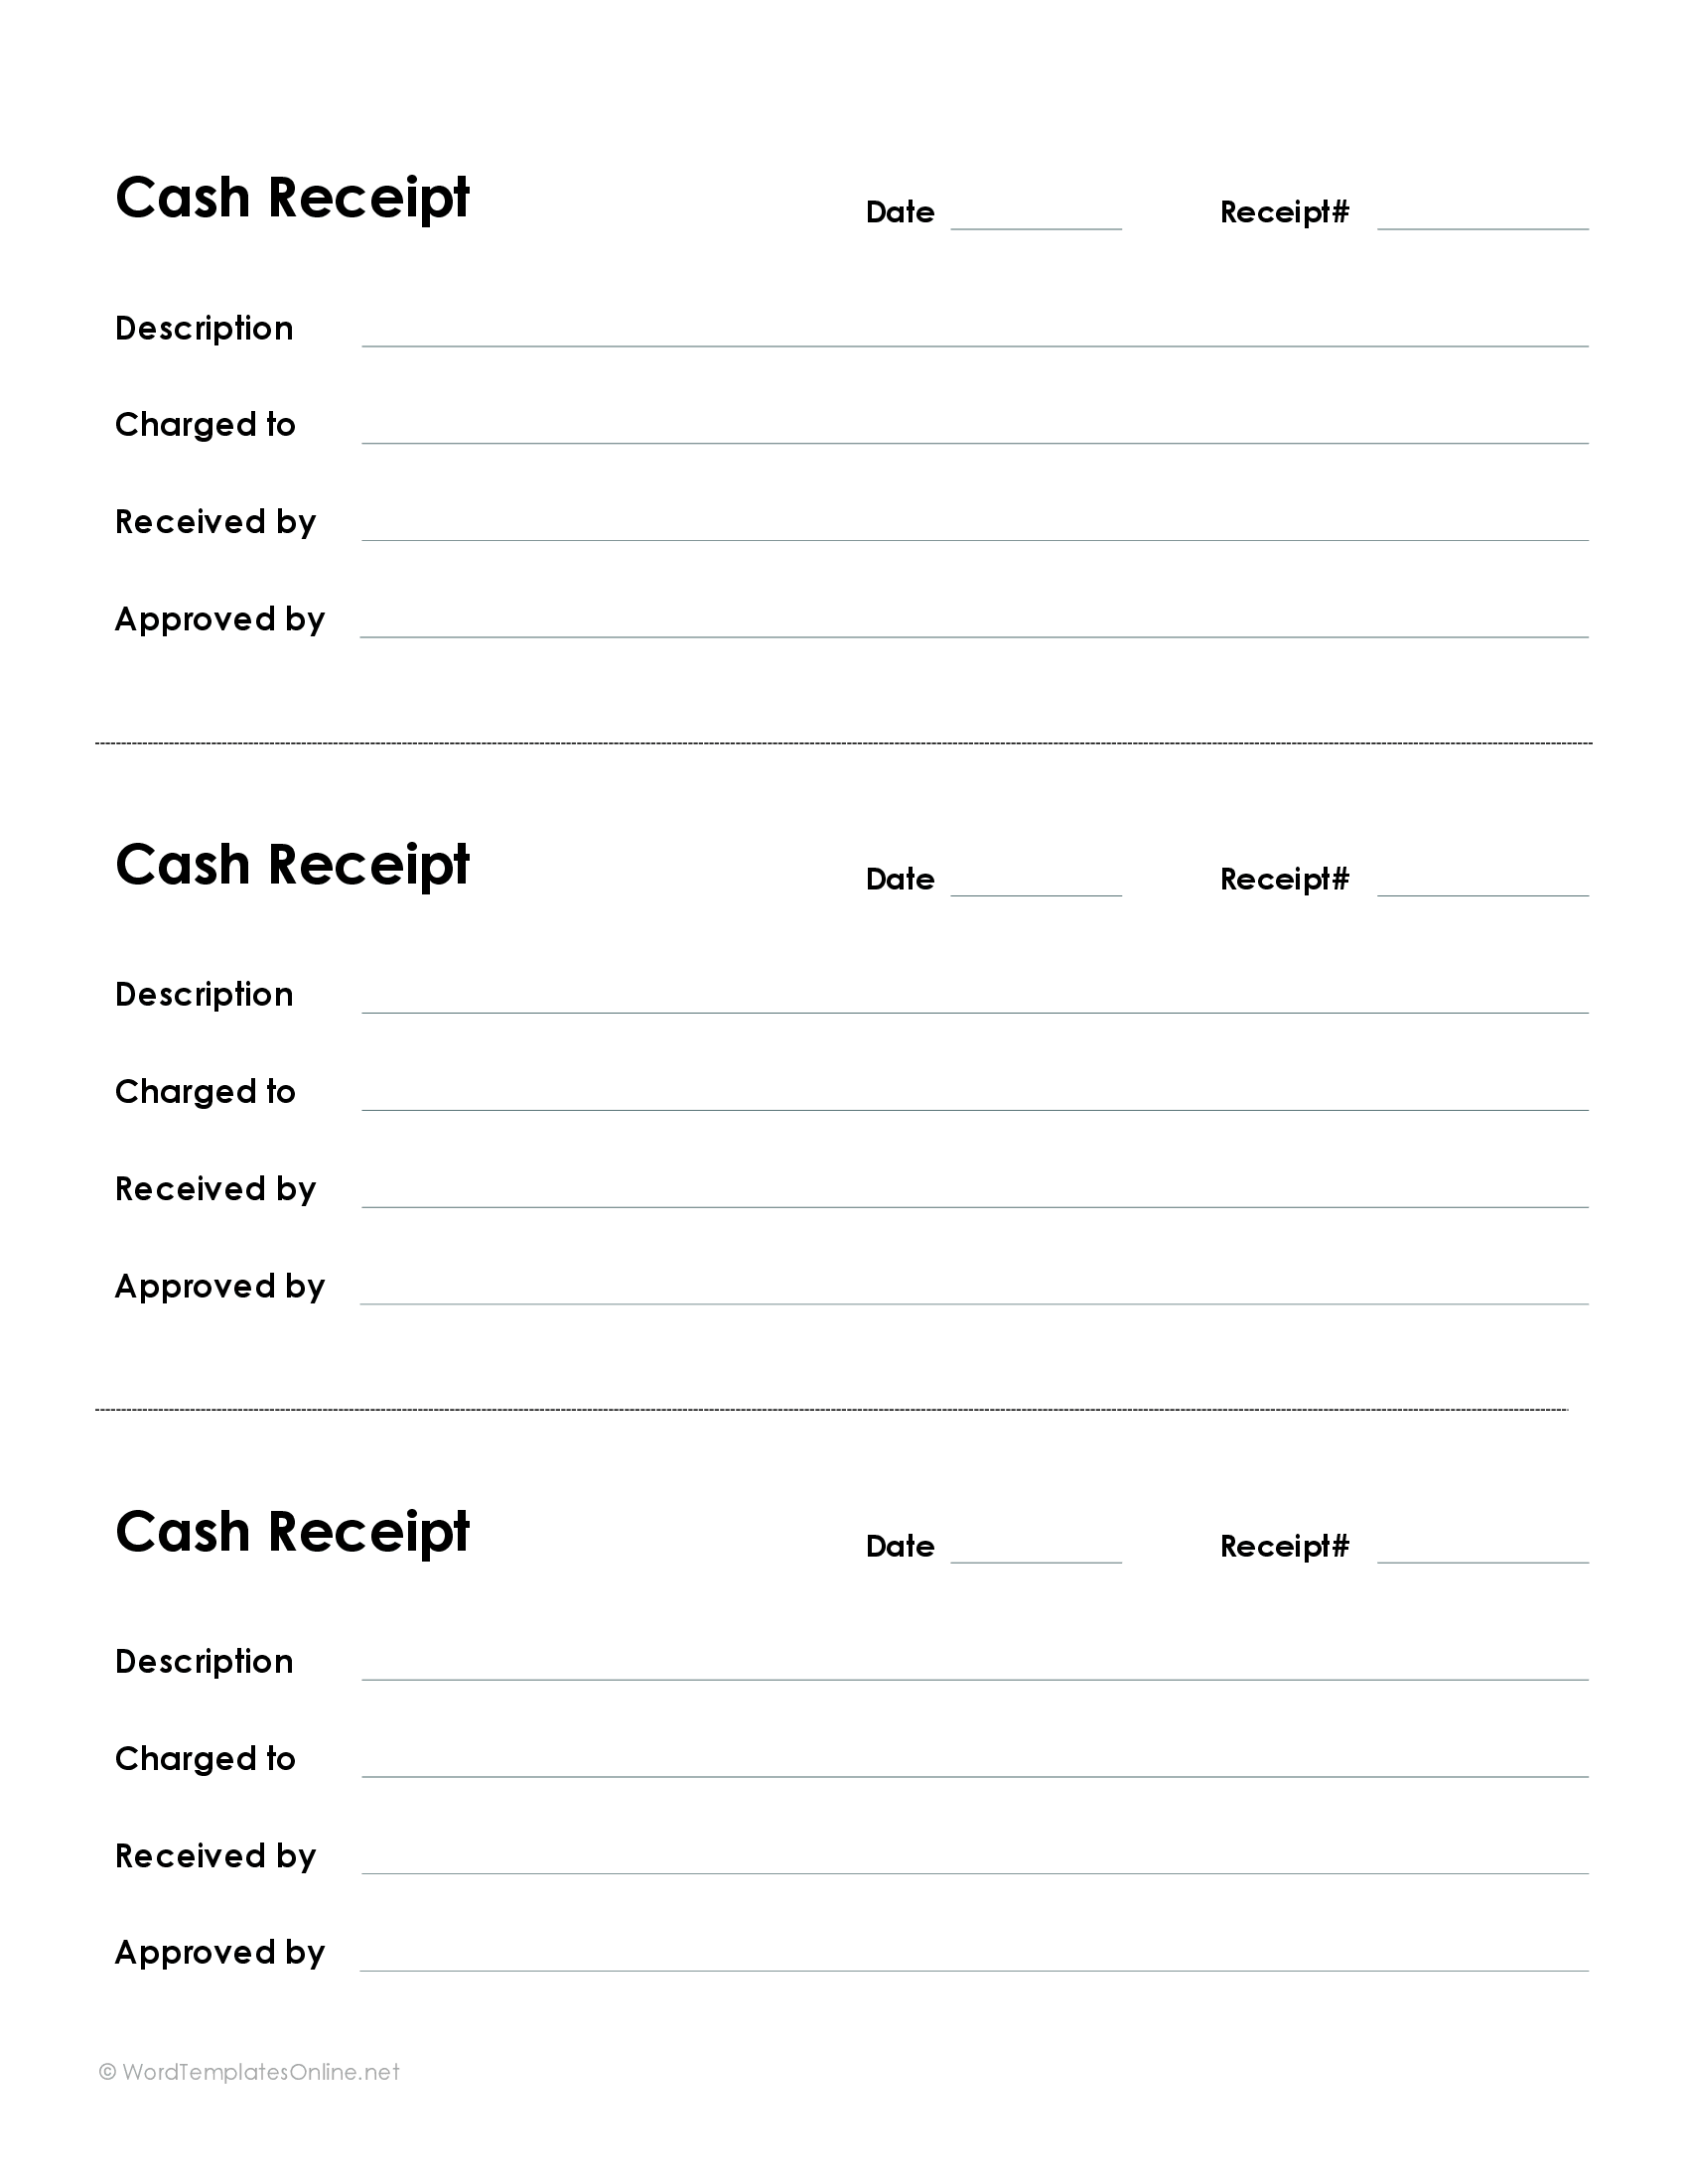 Customizable cash receipt template - Word